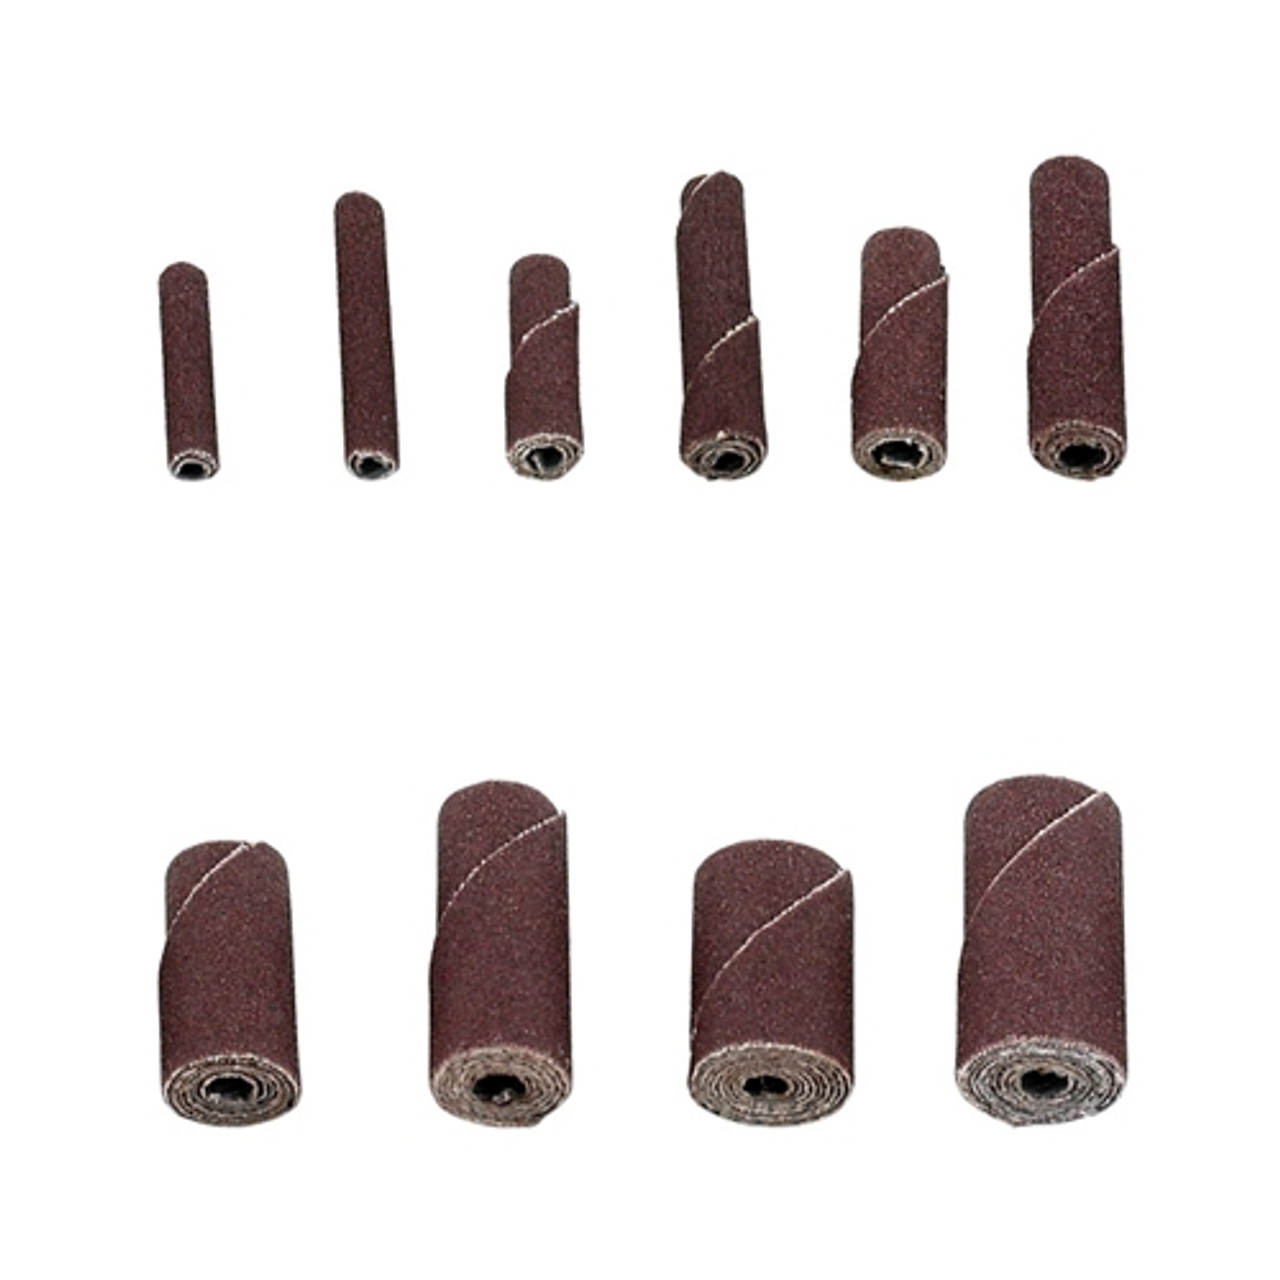 Abrasive Cartridge Rolls - 1/2" x 3/4" x 1/8", 320 Grit